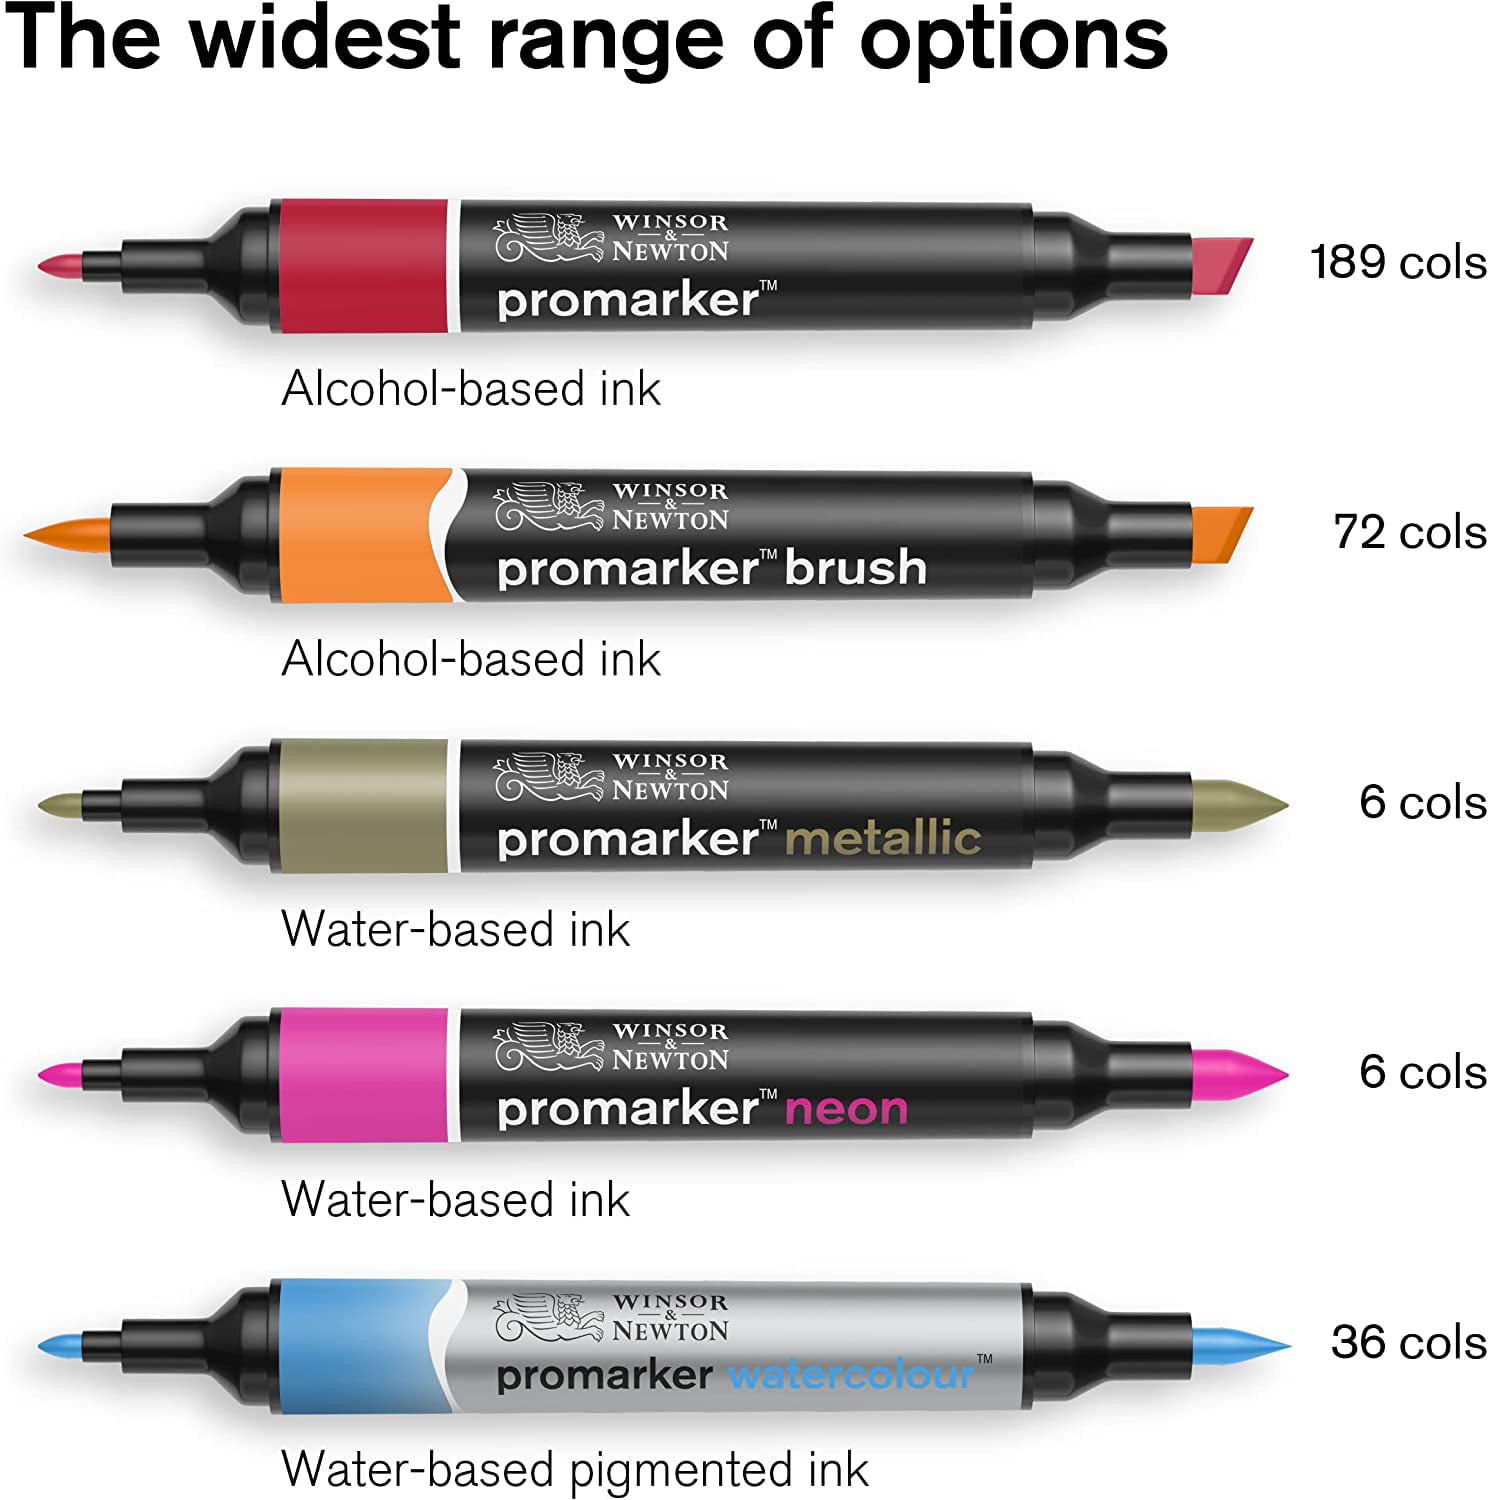 Winsor & Newton ProMarker Watercolor Marker Set, 6-Colors, Basic